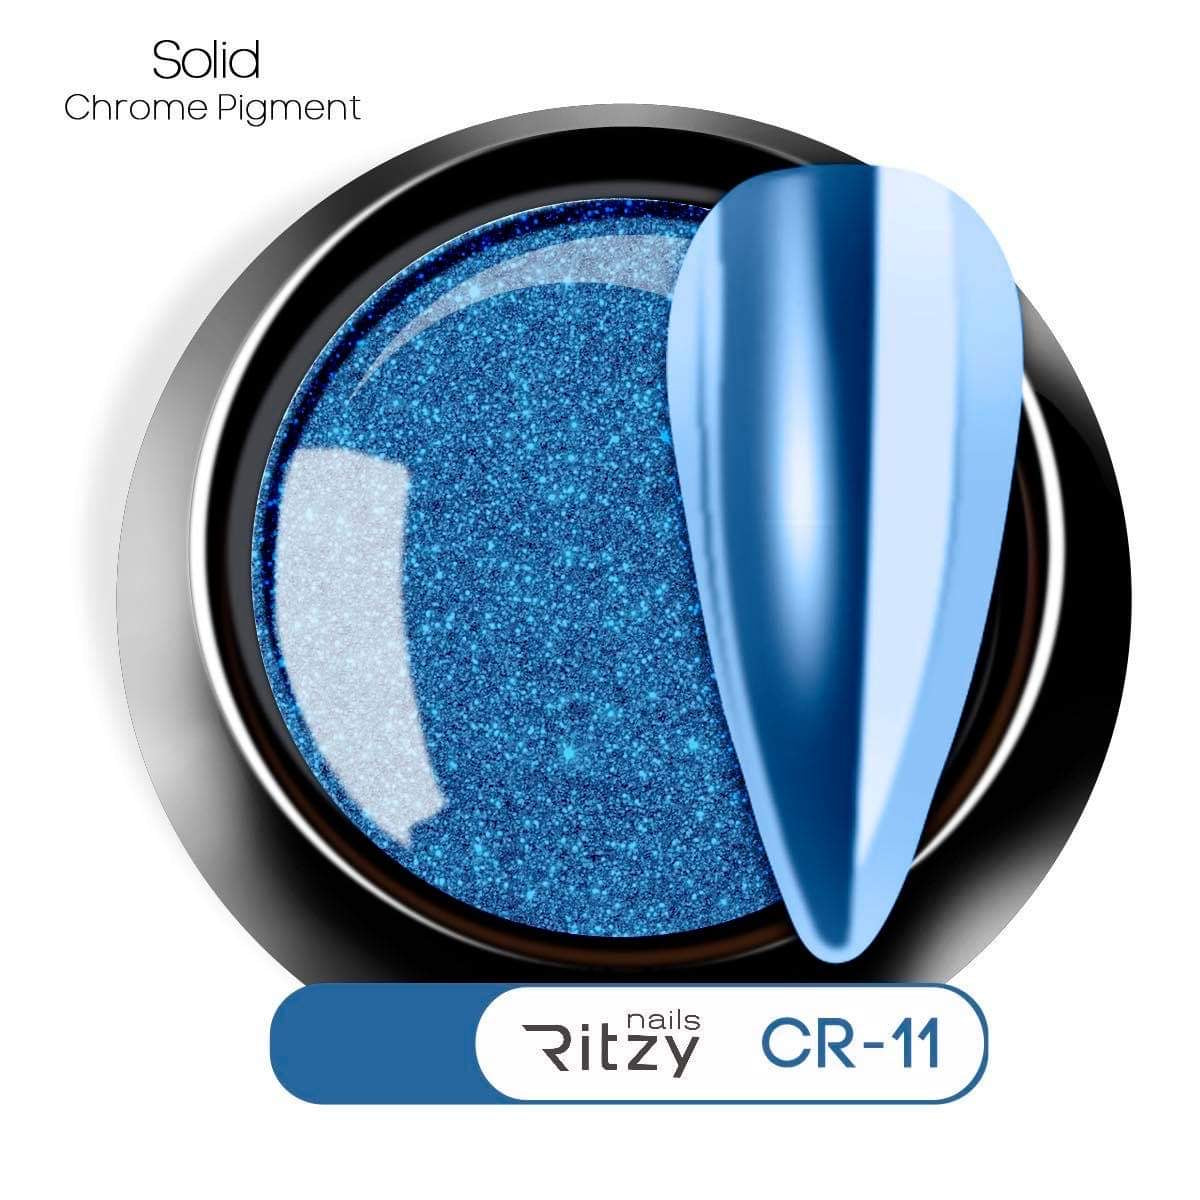 Chrome pigment CR-11